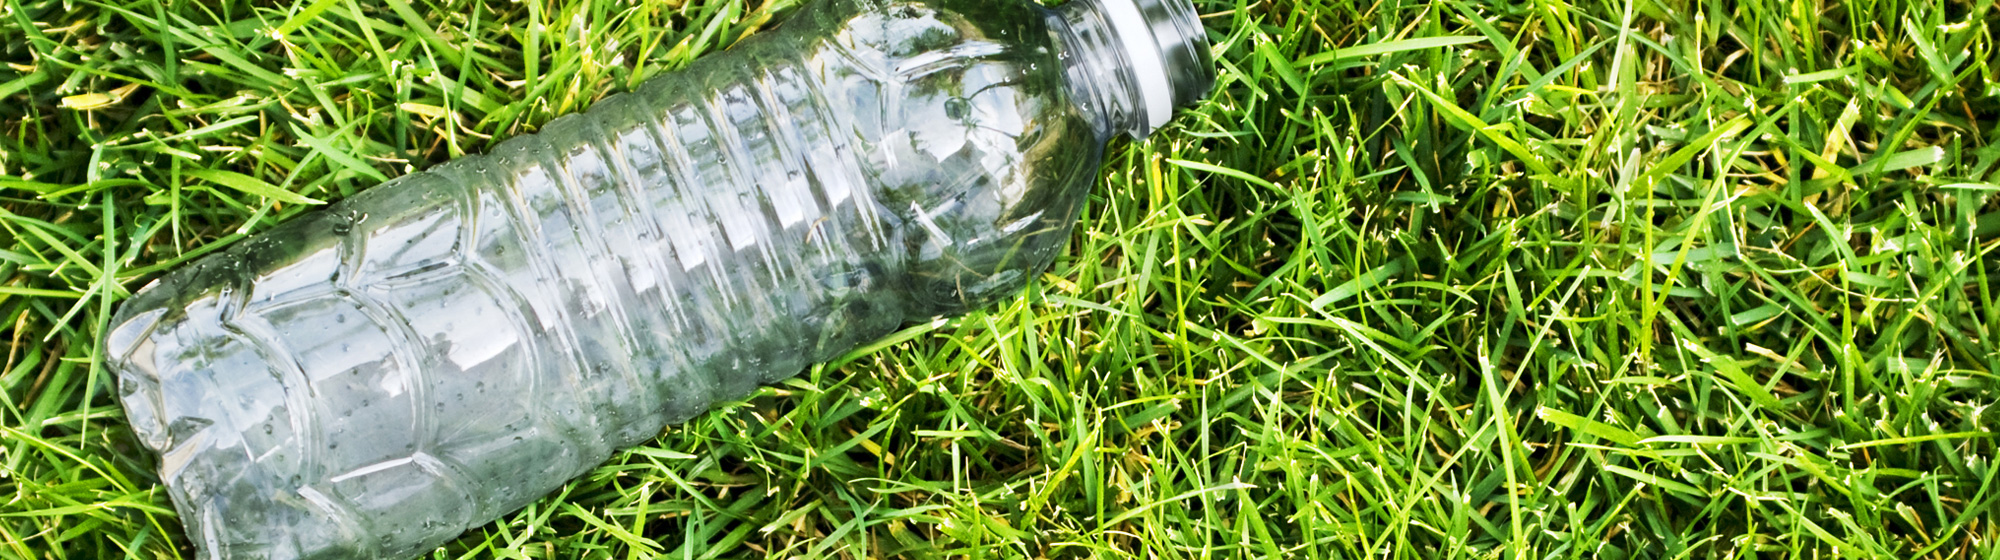 A plastic water bottle lying on grass